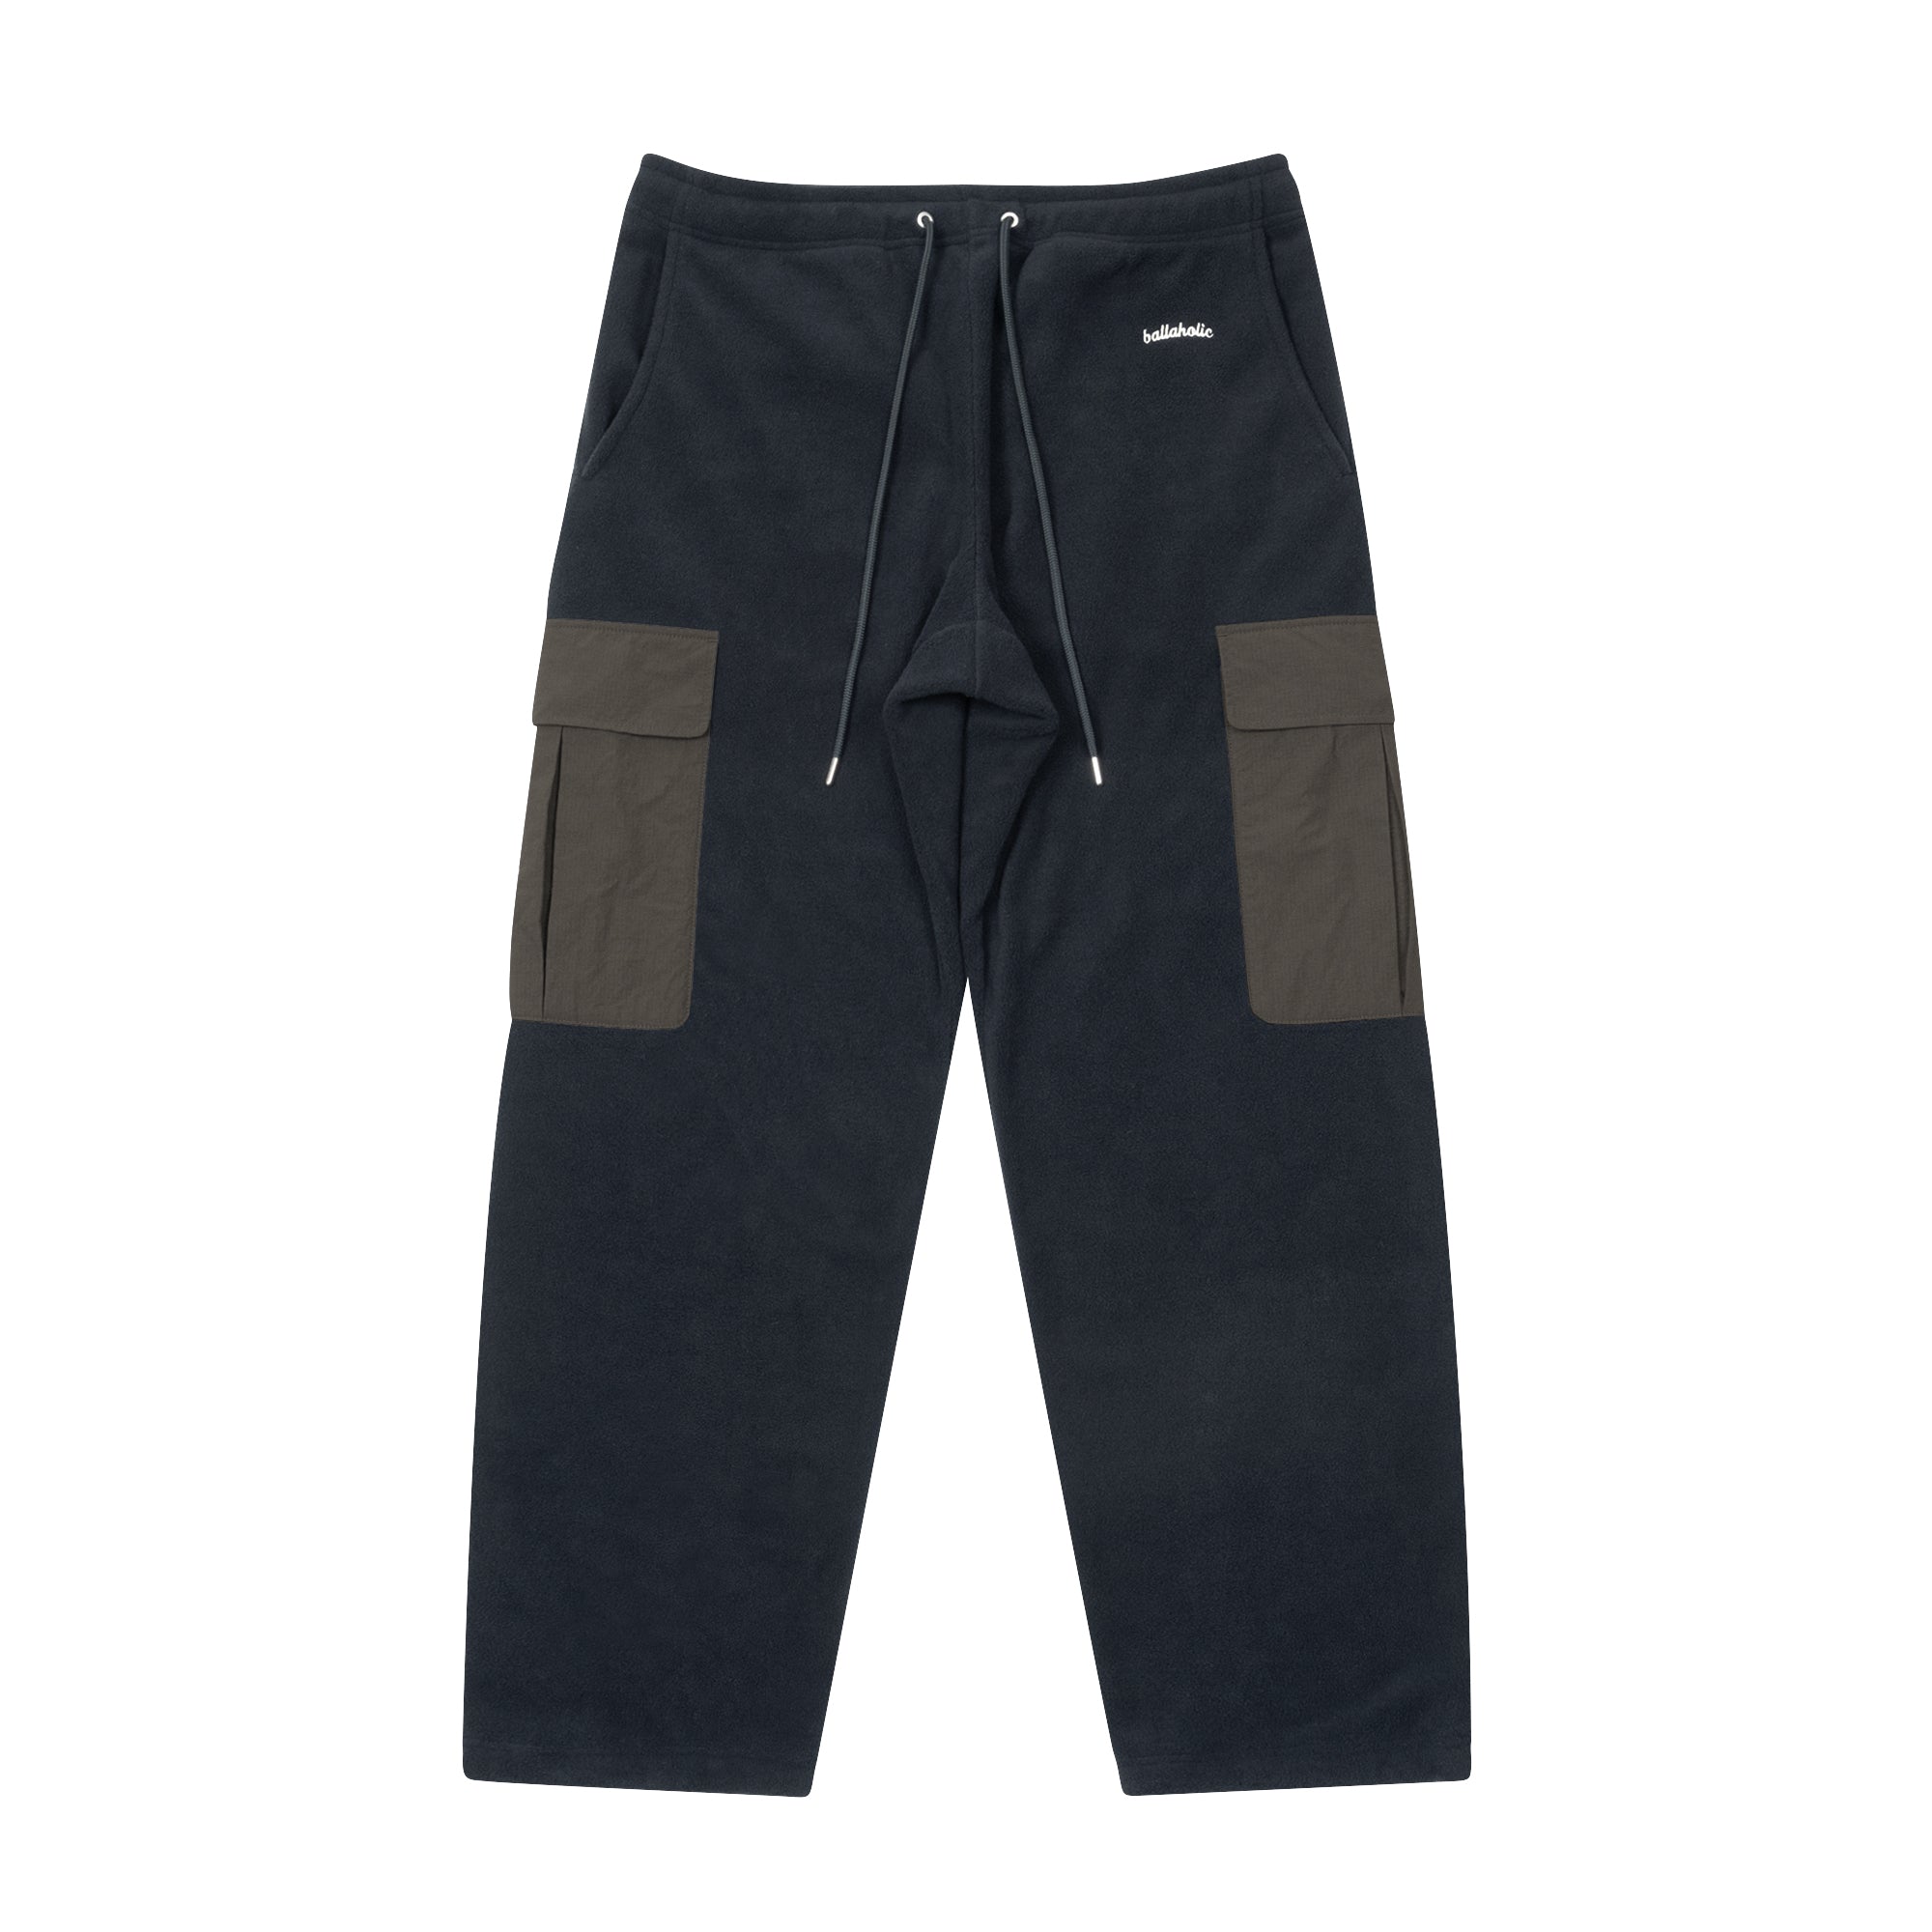 Fleece Cargo Pants (dark navy) – ballaholic